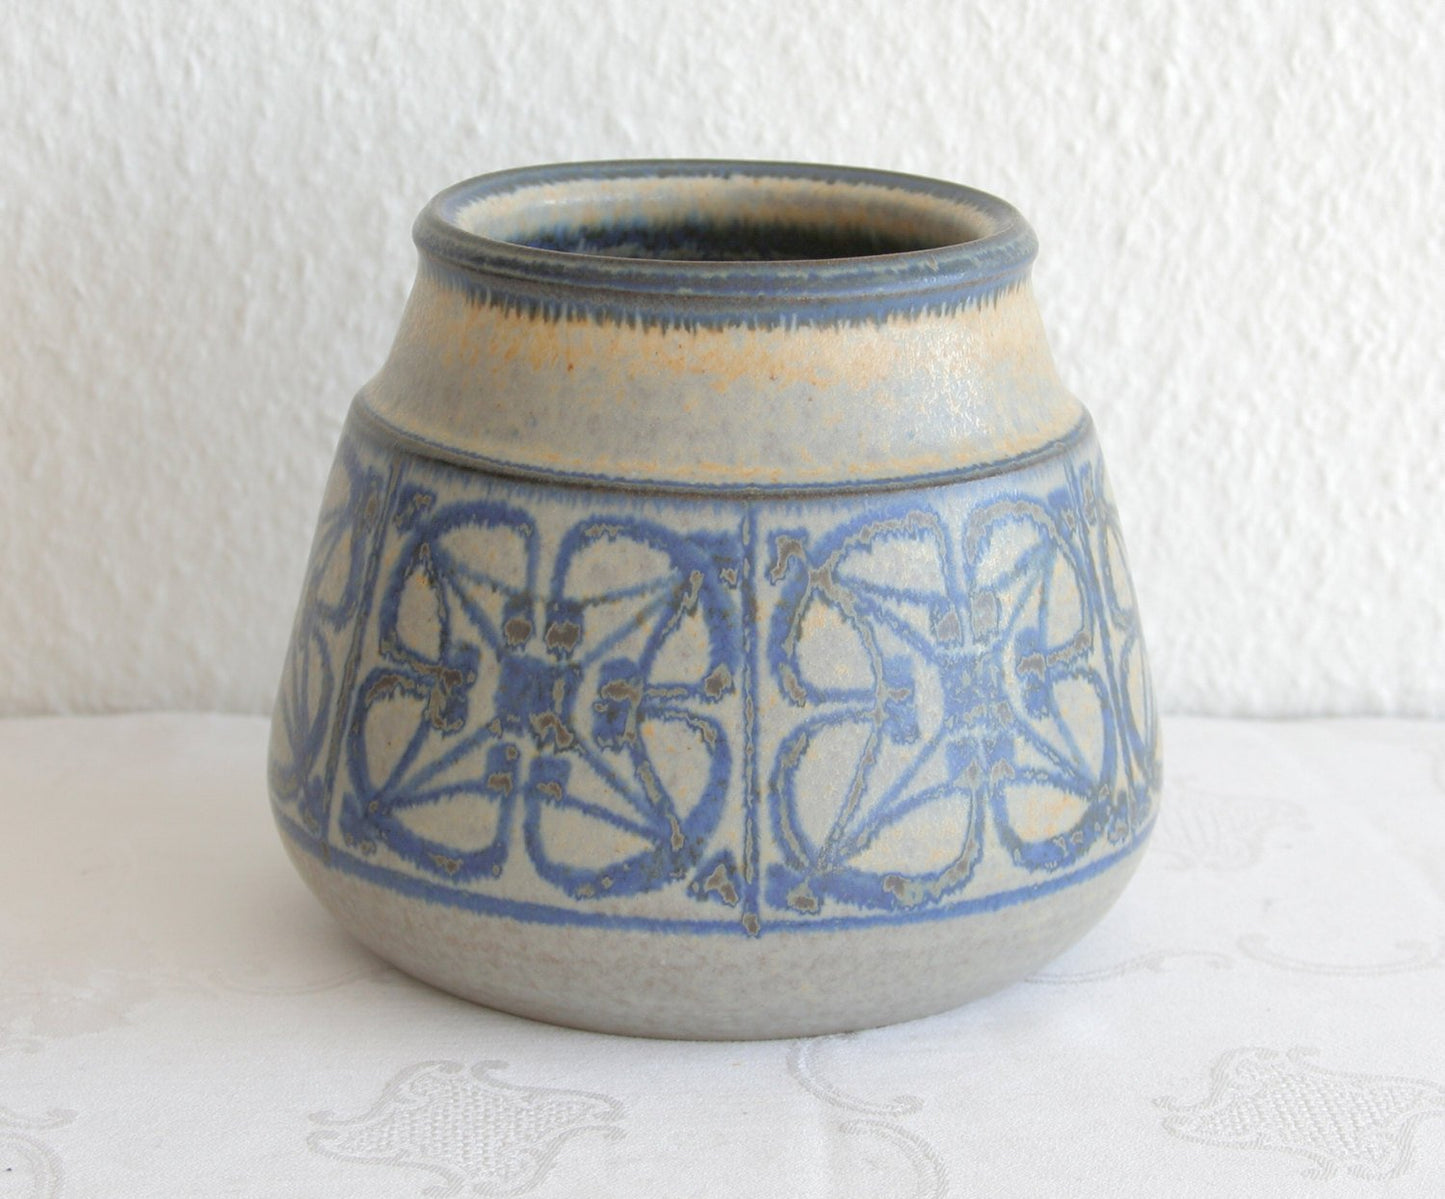 MARIANNE STARCK / MICHAEL ANDERSEN Geometric Patterned Blue Grey Glazed Stoneware Vase Mollaris.com 